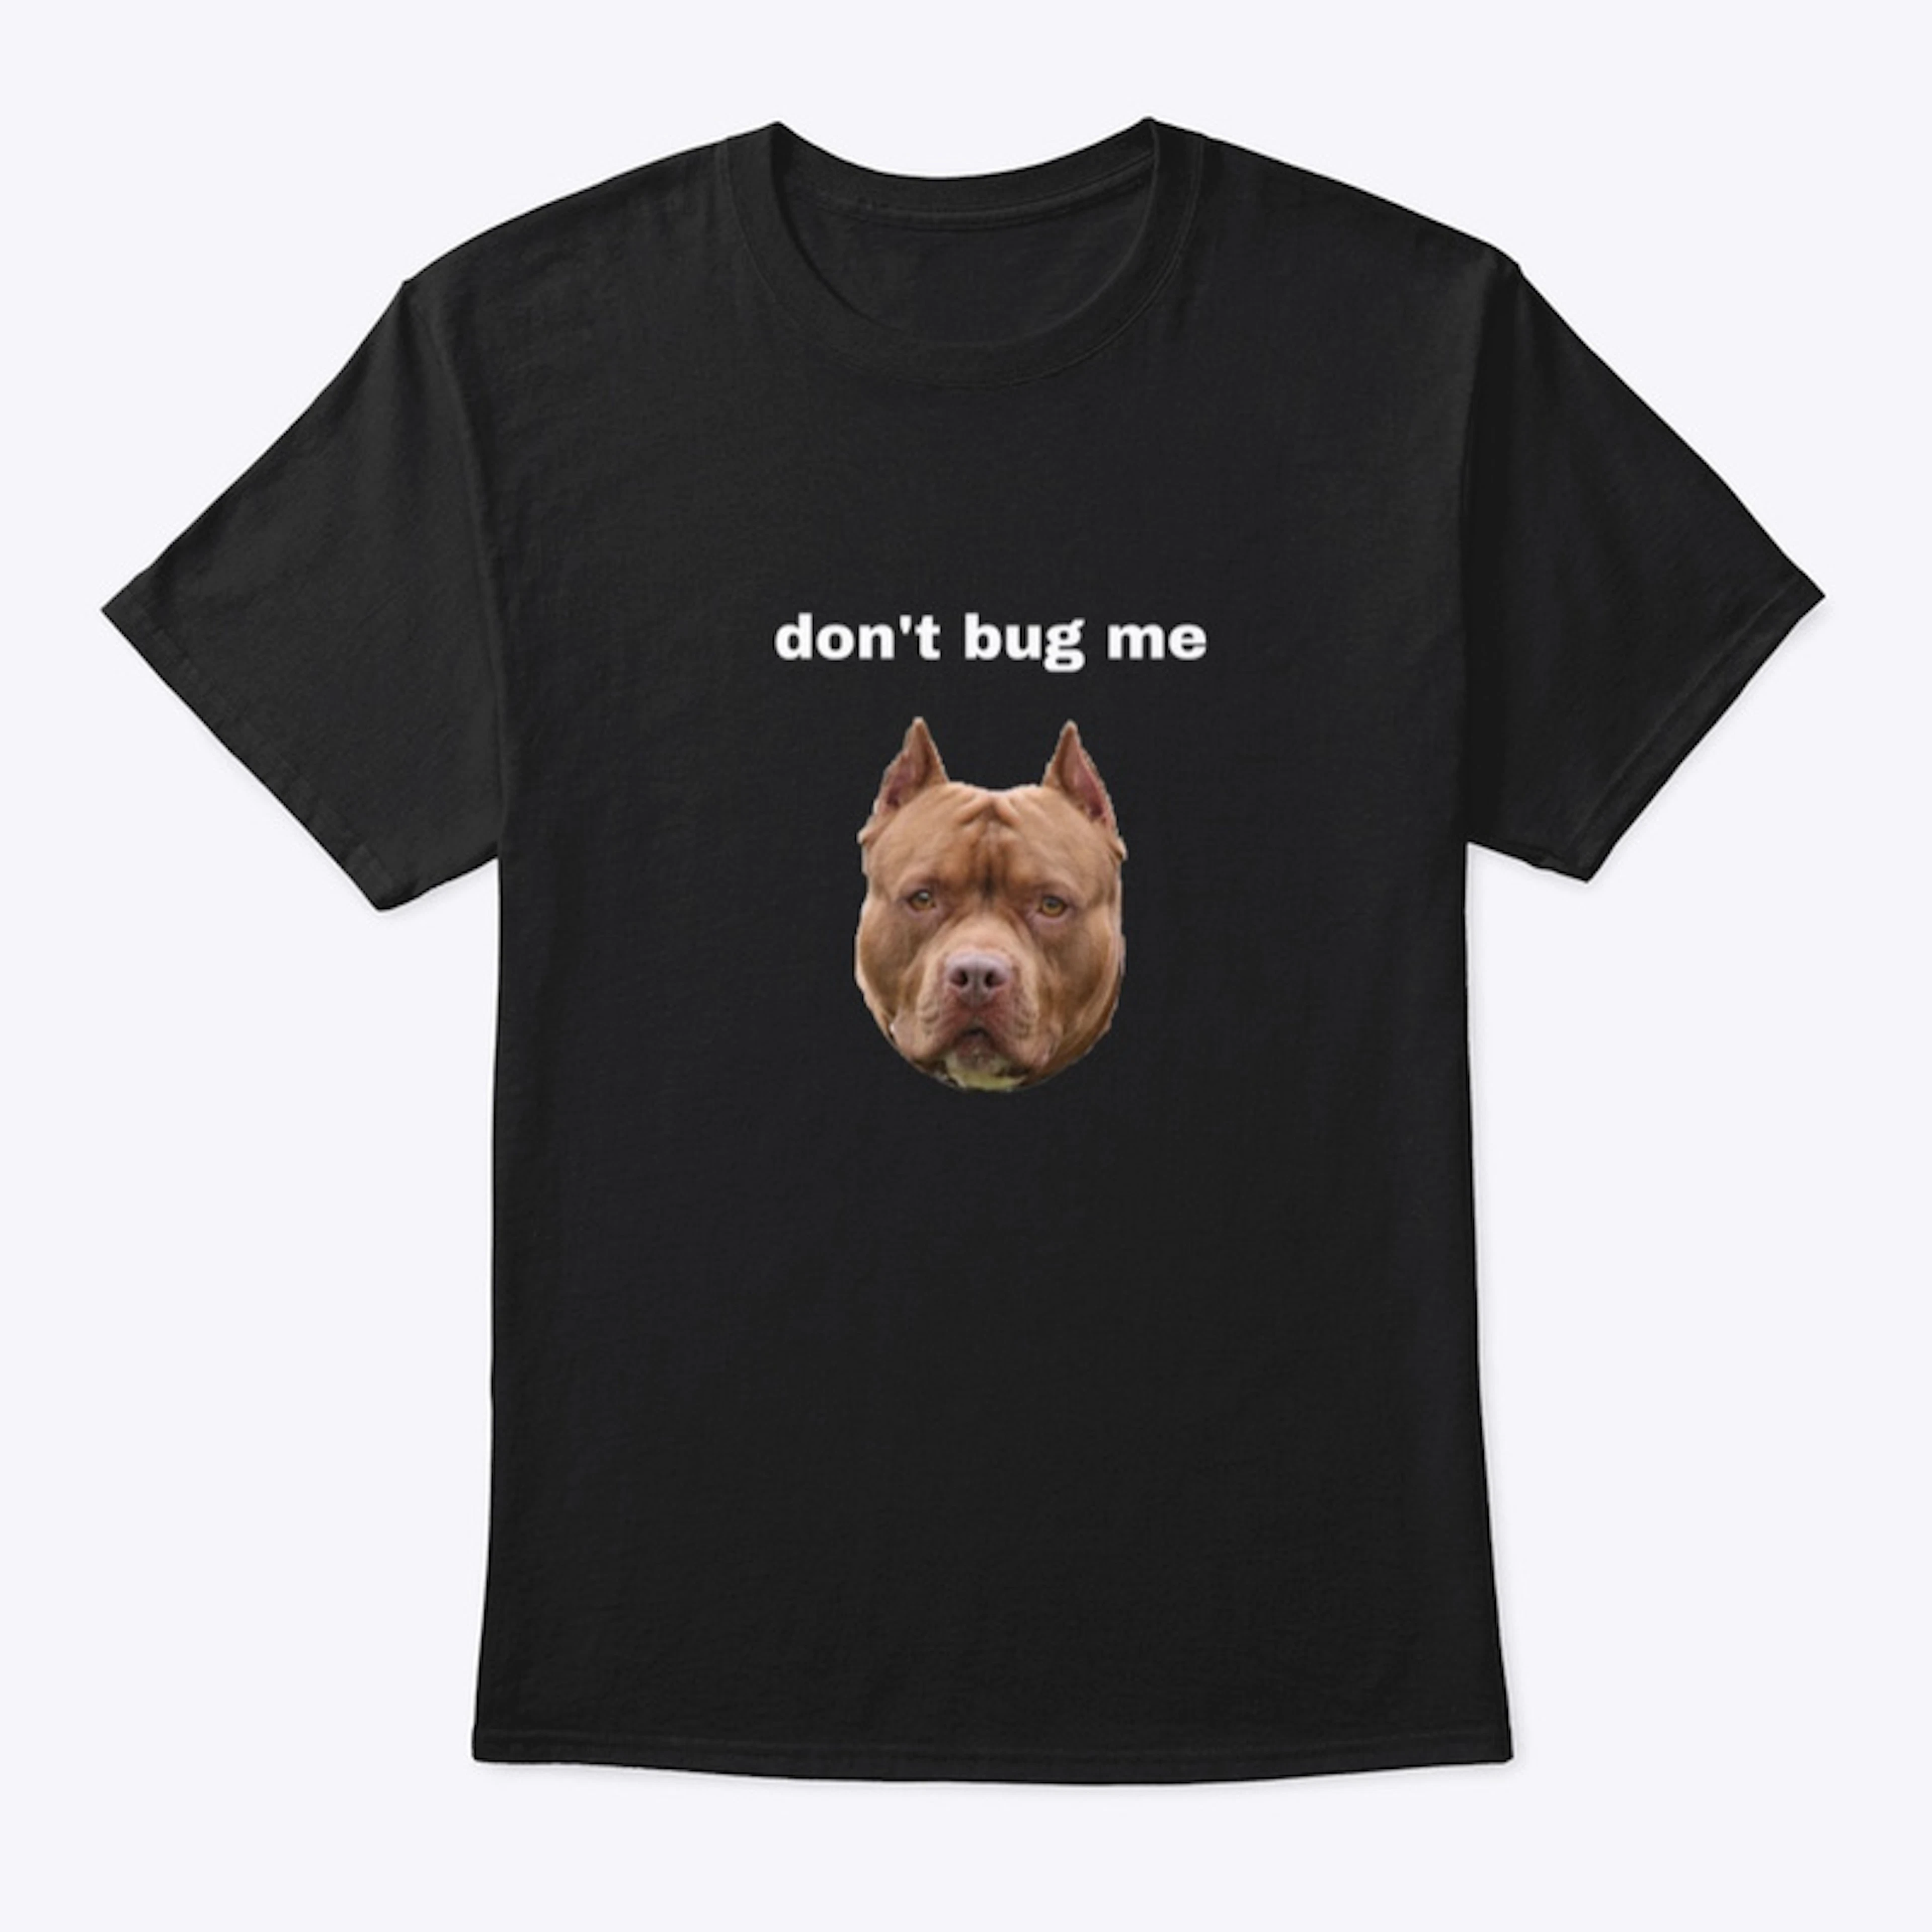 “Don’t bug me” pit bull dog